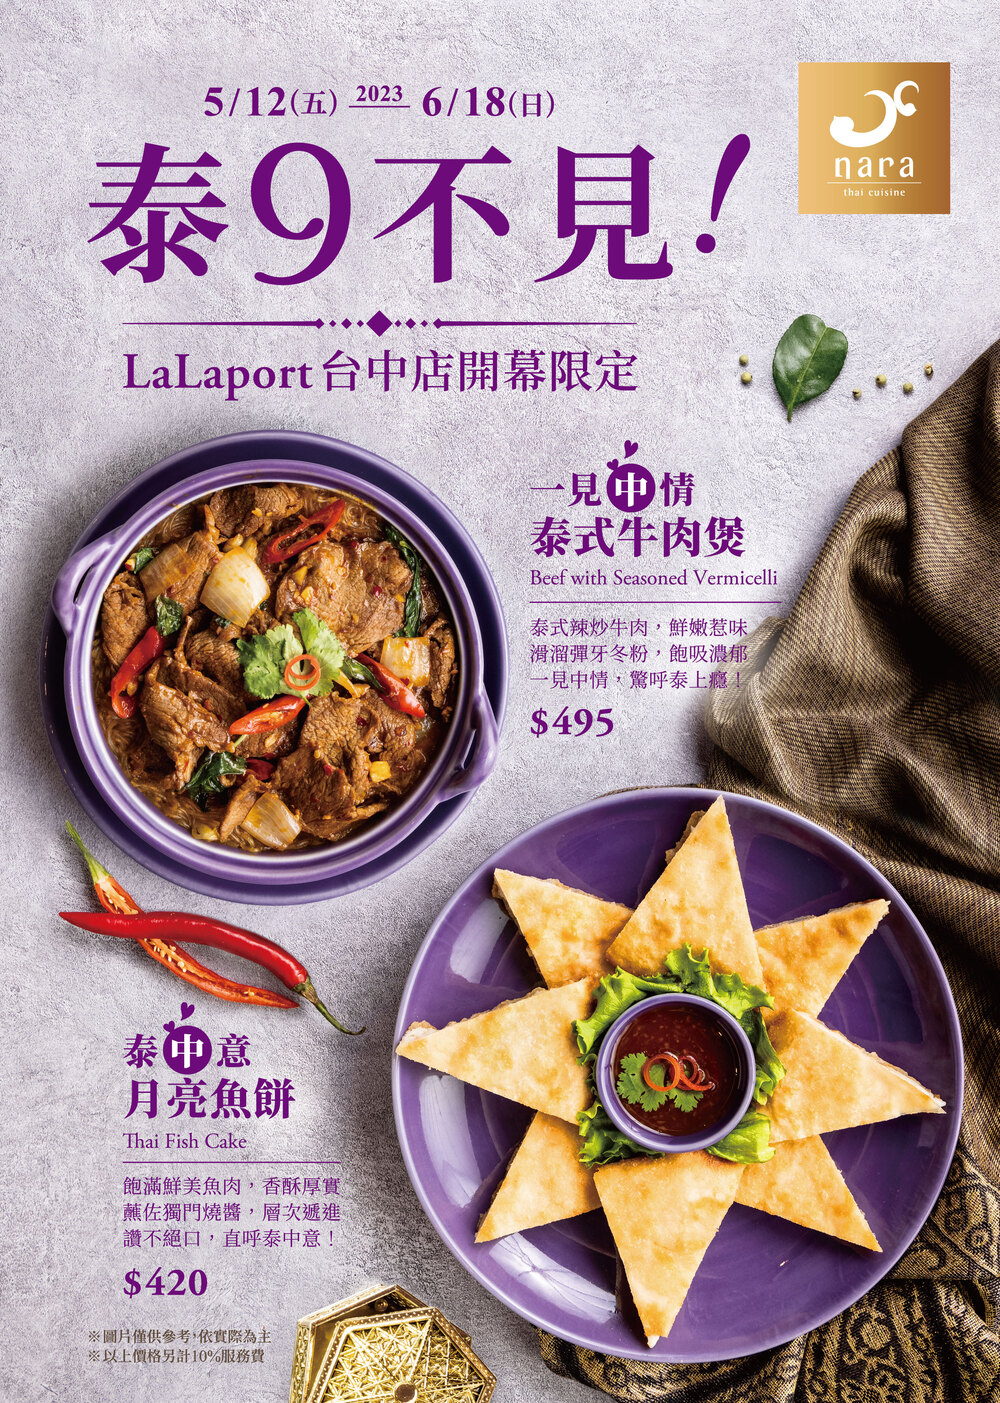 Nara台中開幕 菜單 OL 1 | NARA 米其林推薦泰式料理